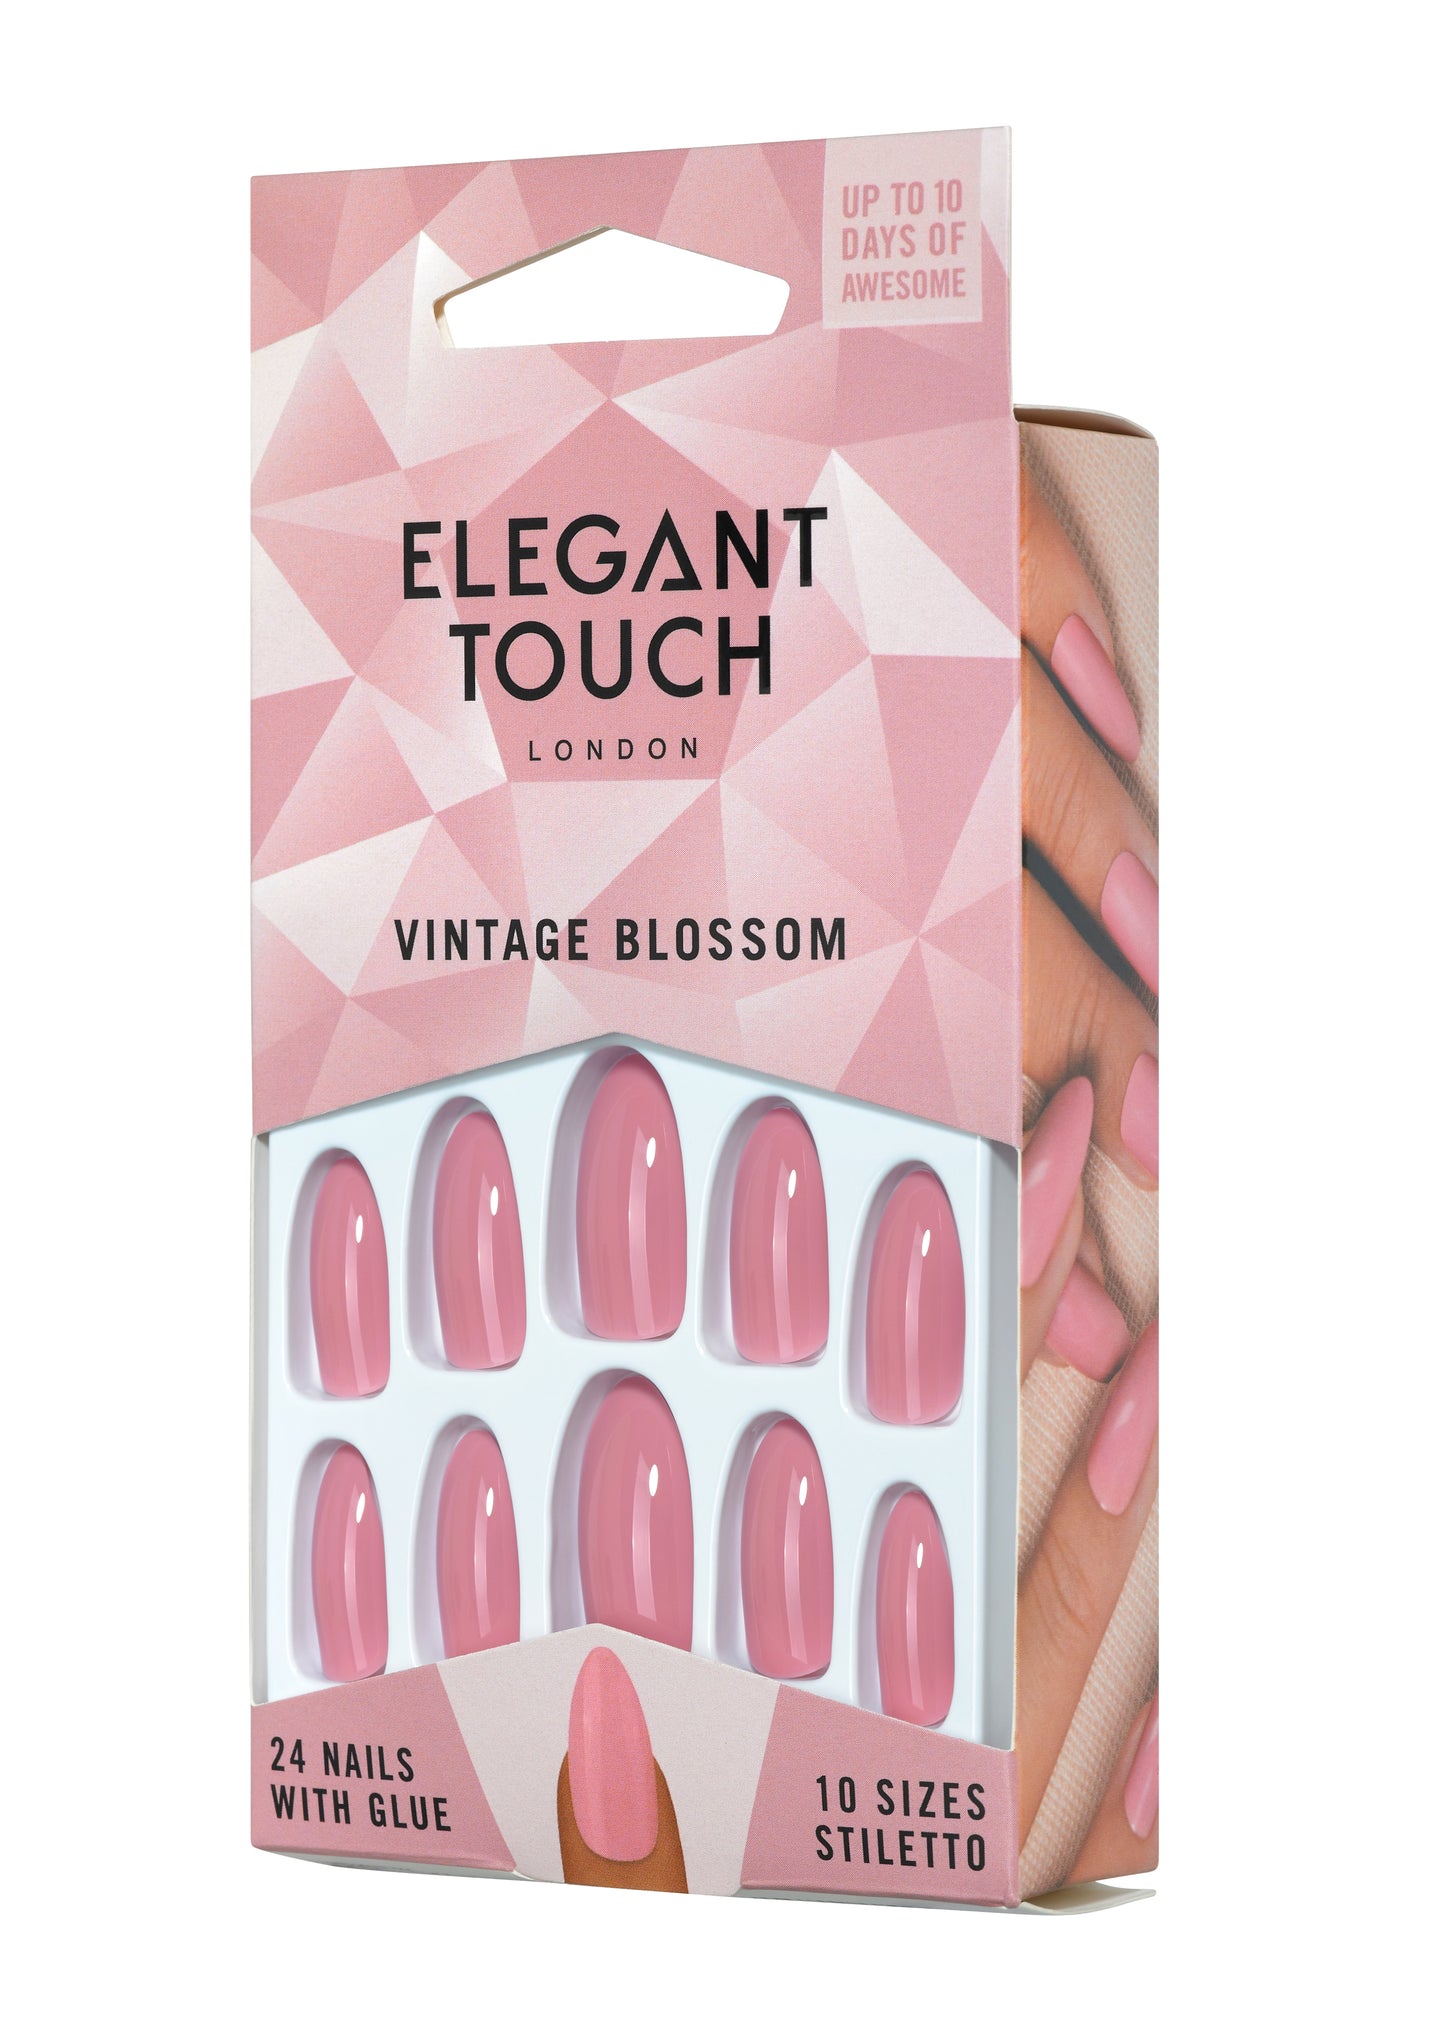 Elegant Touch Polished Core Nails - Vintage Blossom